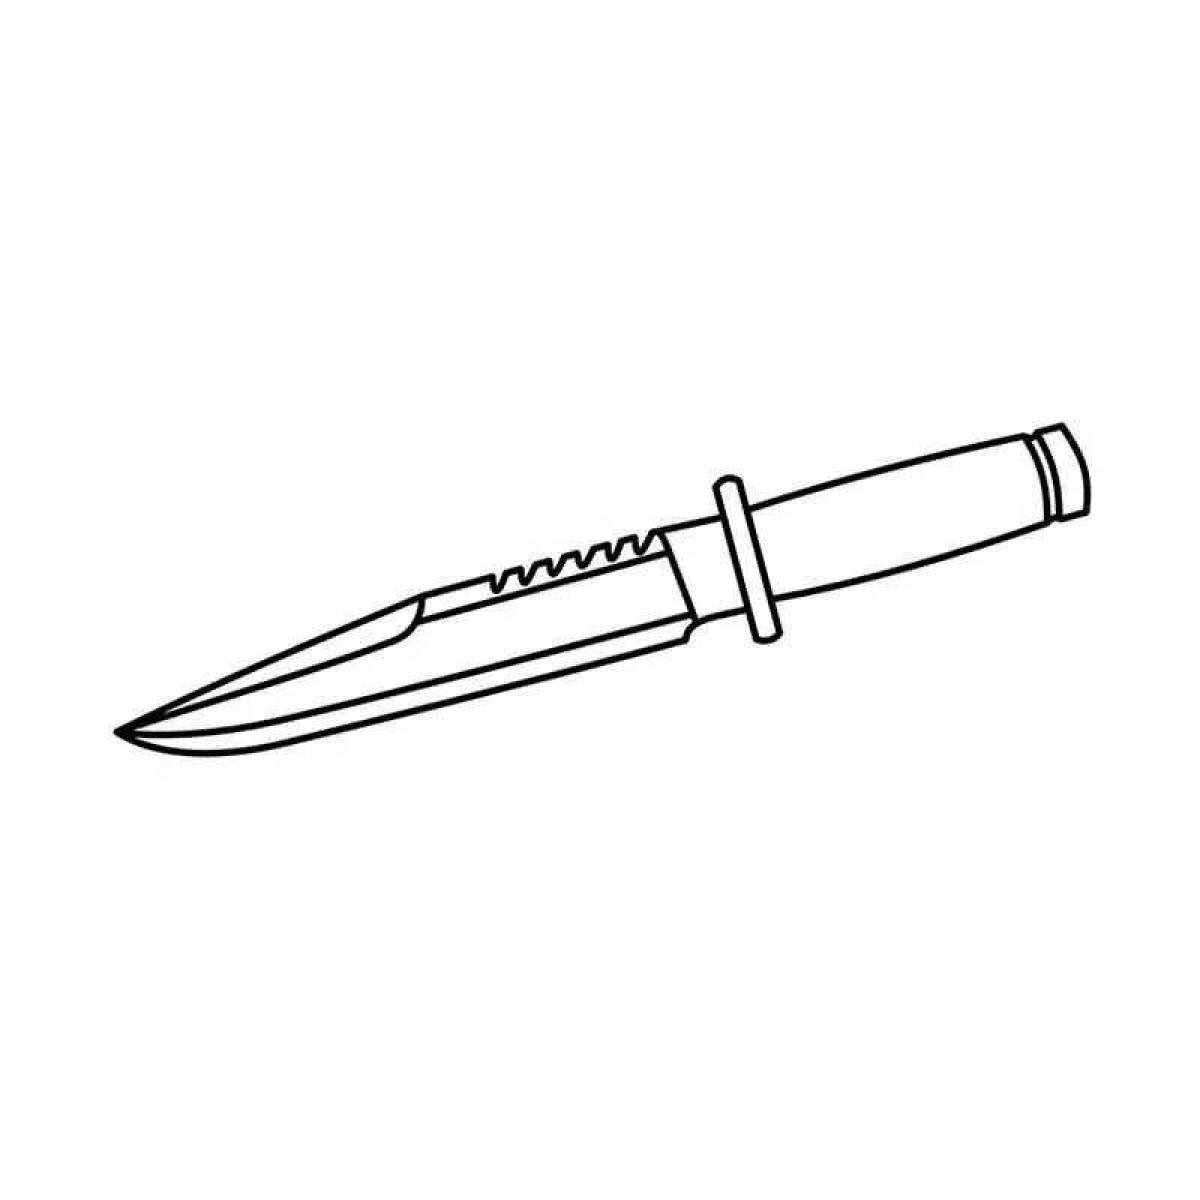 Раскраска стендов нож. Нож м9 байонет чертеж. Нож м9 байонет раскраски. Раскраски стандофф 2 ножи м9 байонет. Штык нож м9 раскраска.